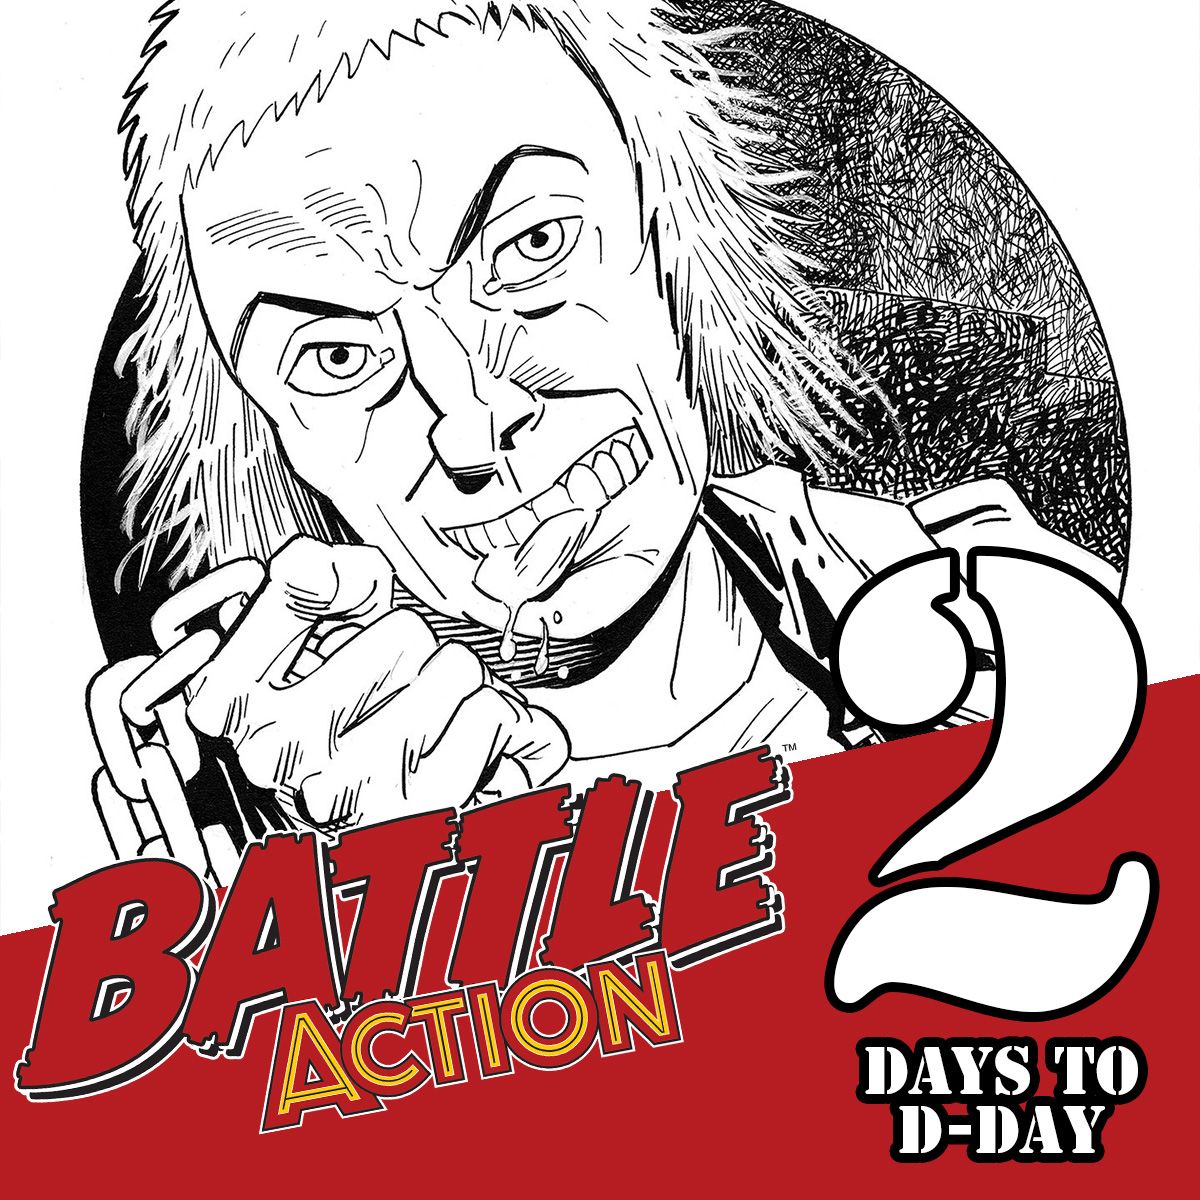 2 Days to Battle Action: Kids Rule O.K.!